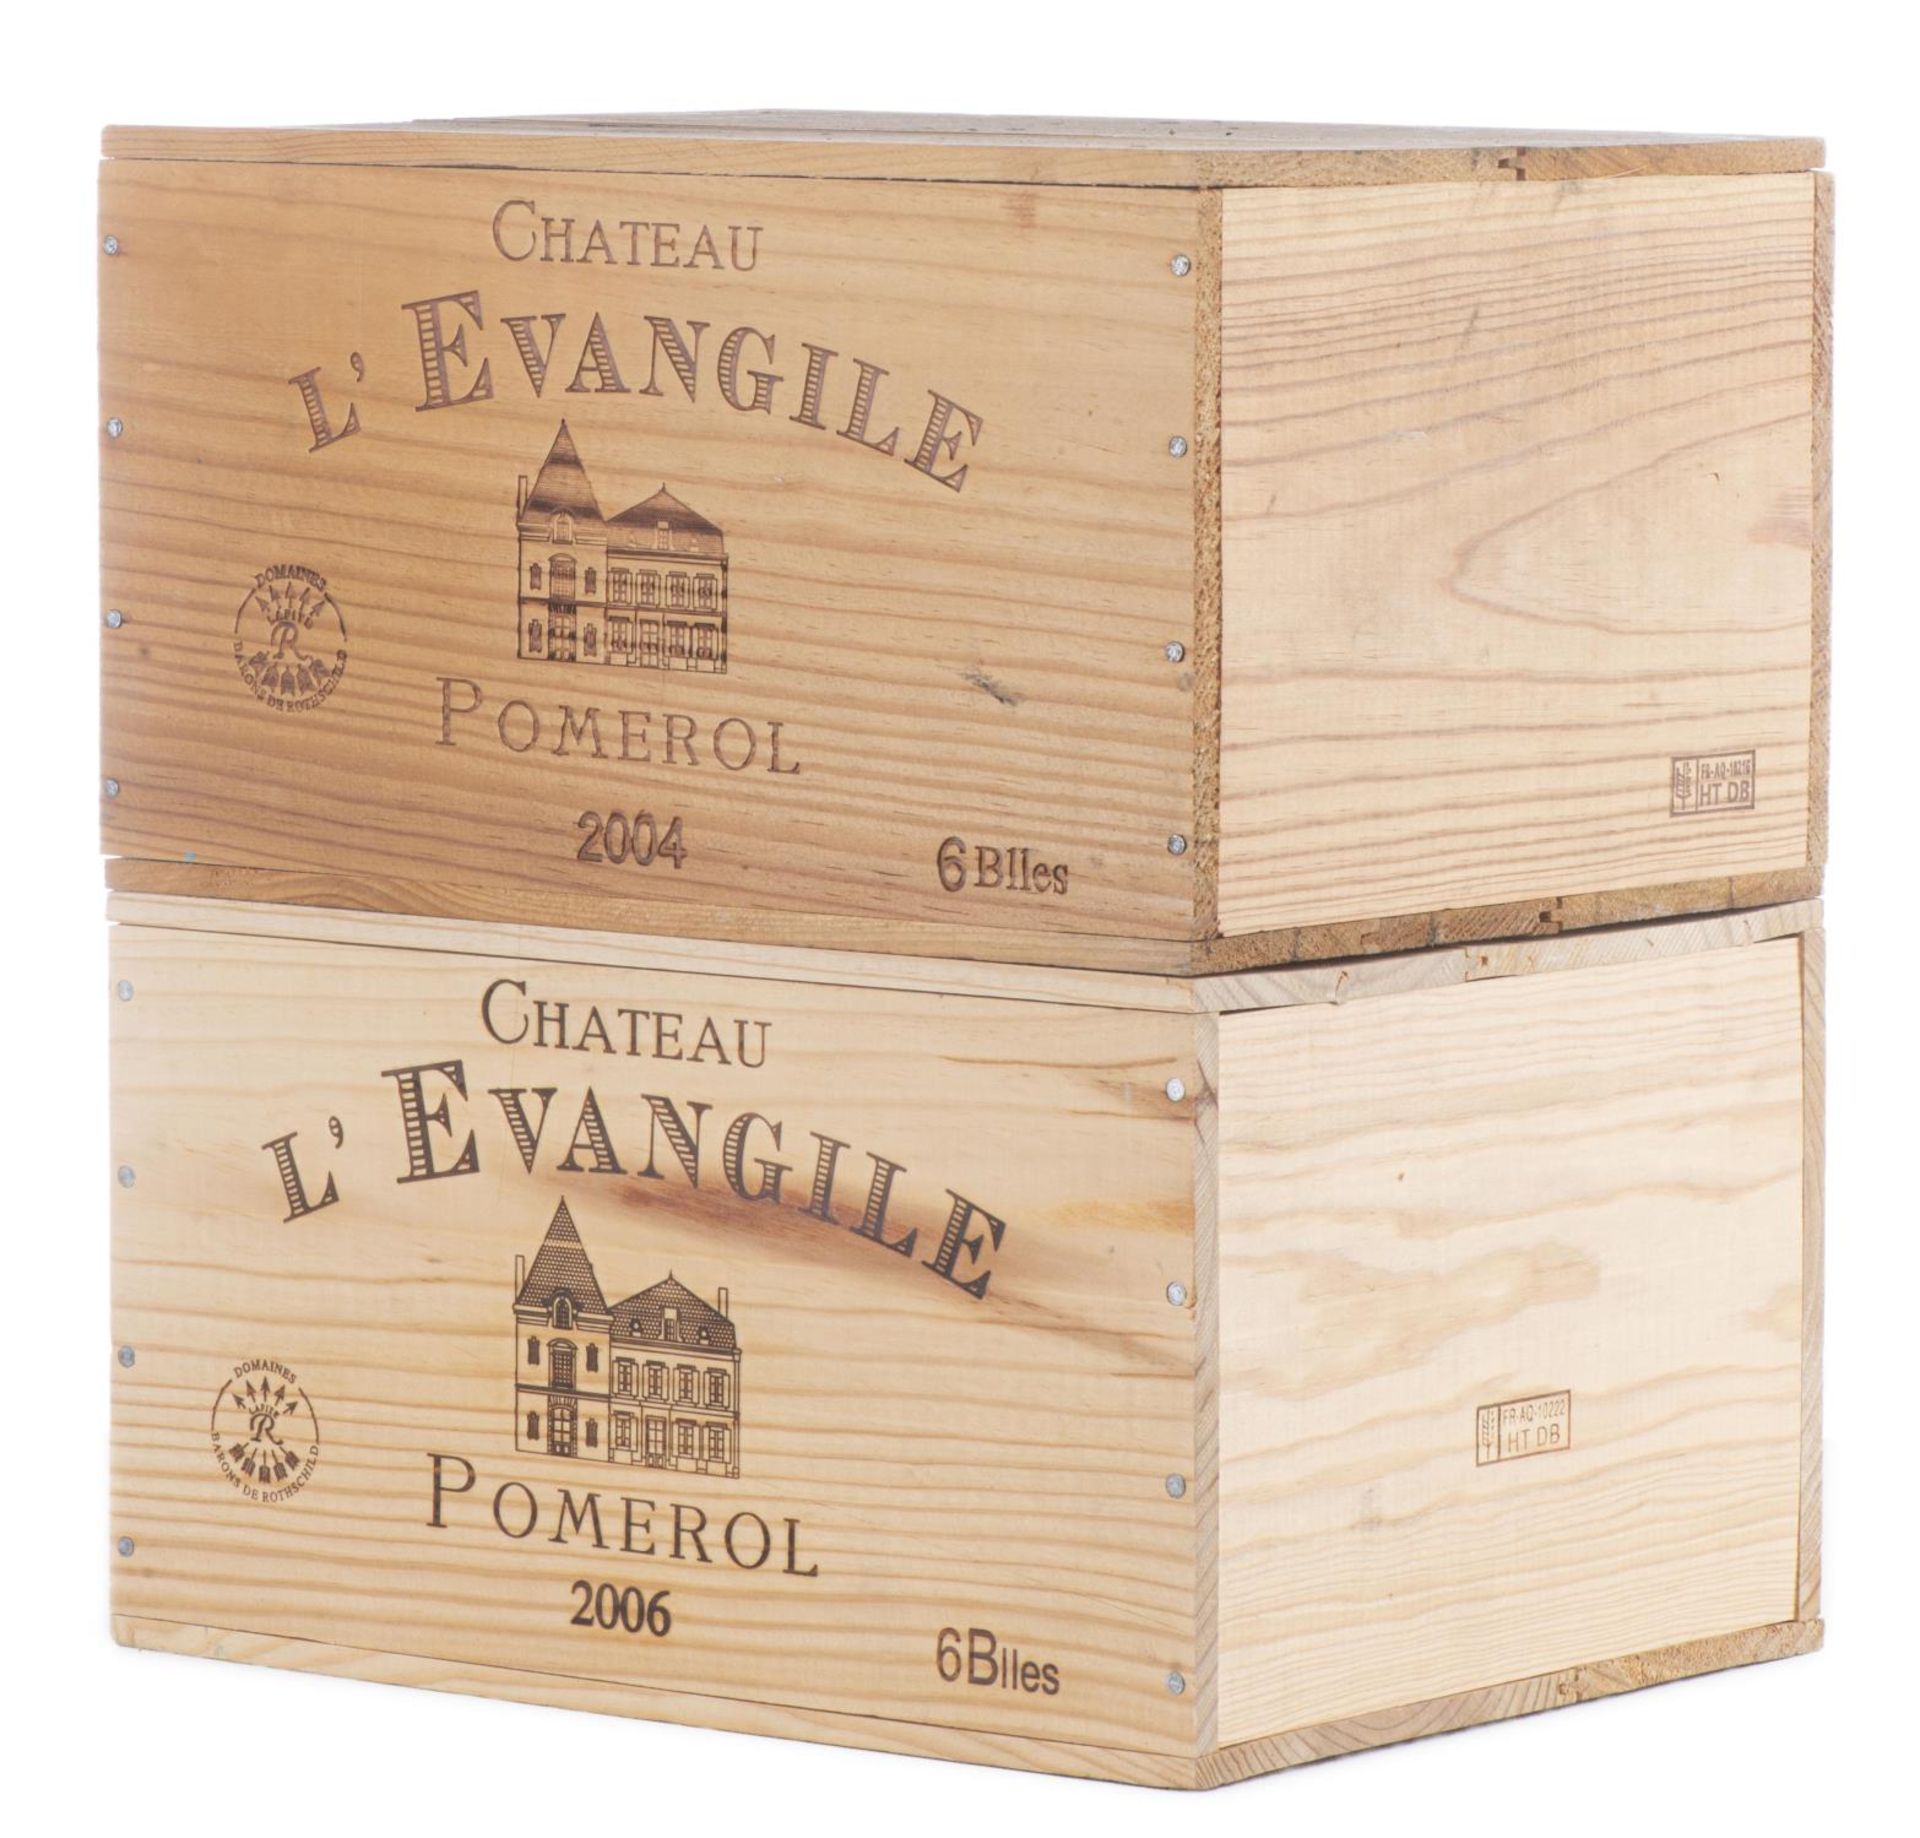 Château l'Evangile, Pomerol, 2004 & 2005 - Image 3 of 4